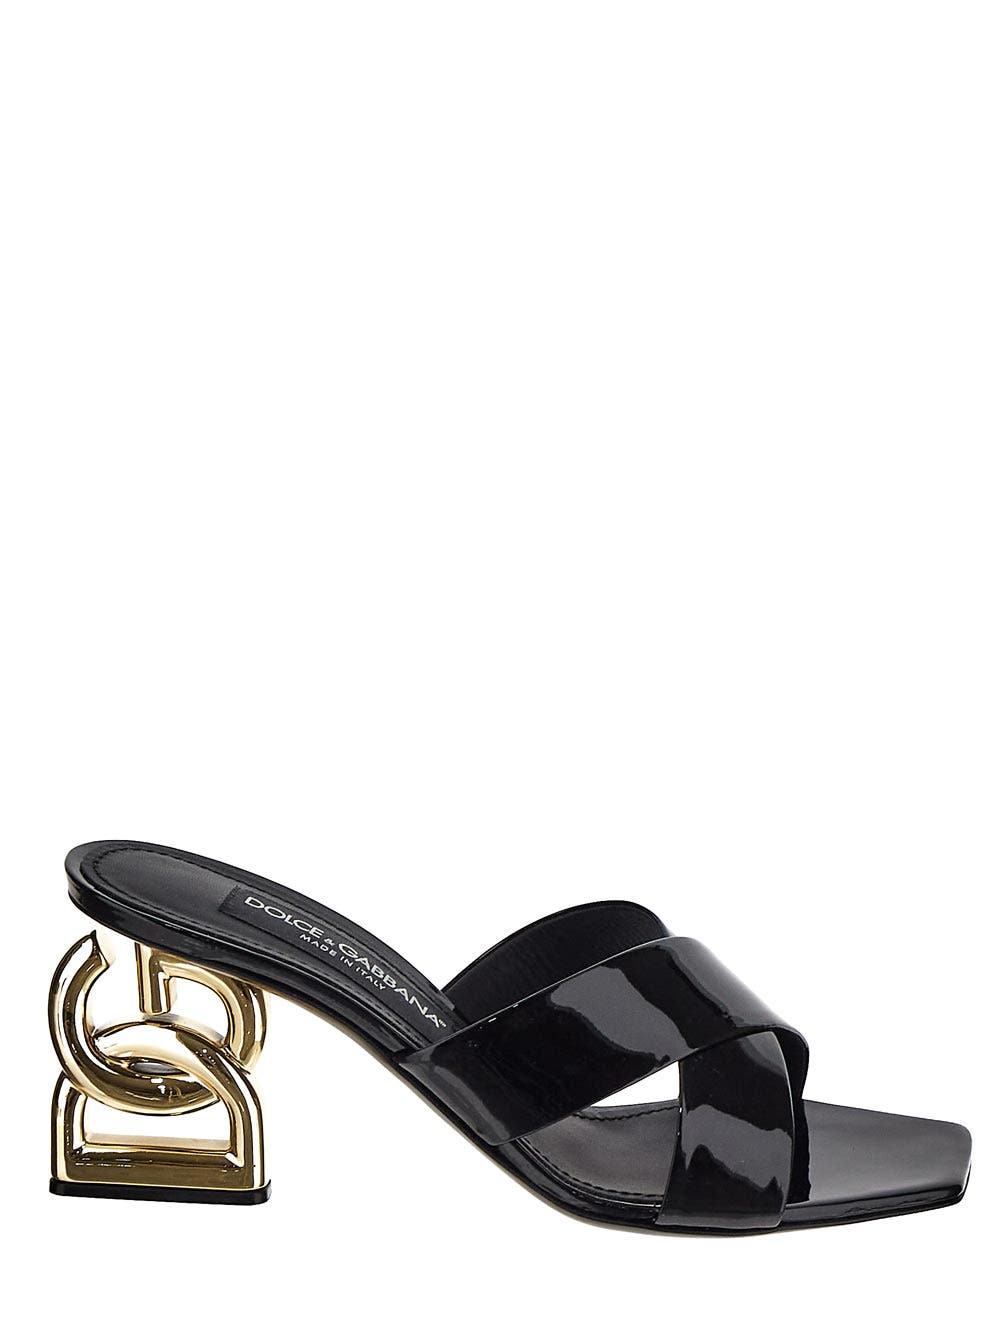 Dolce & Gabbana Logo Mule In Black